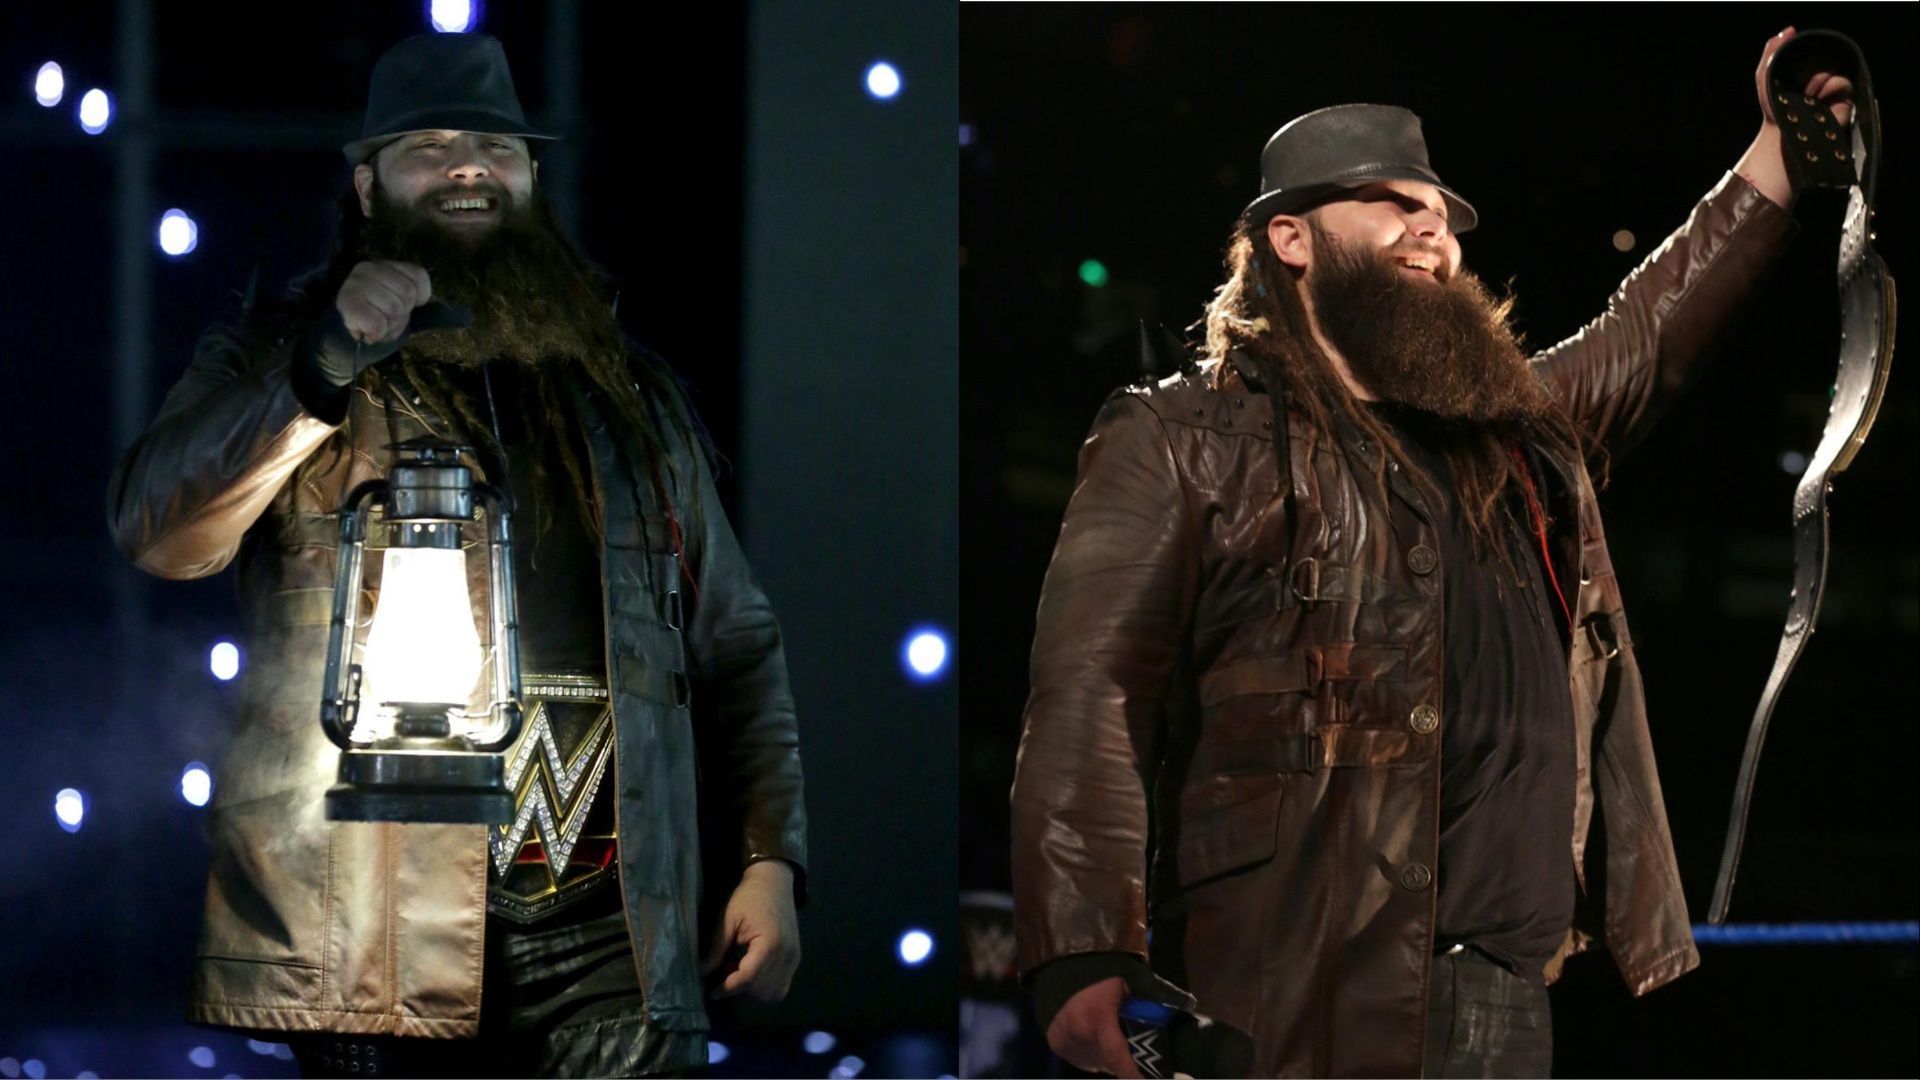 Bray Wyatt makes his entrance as WWE Champion.